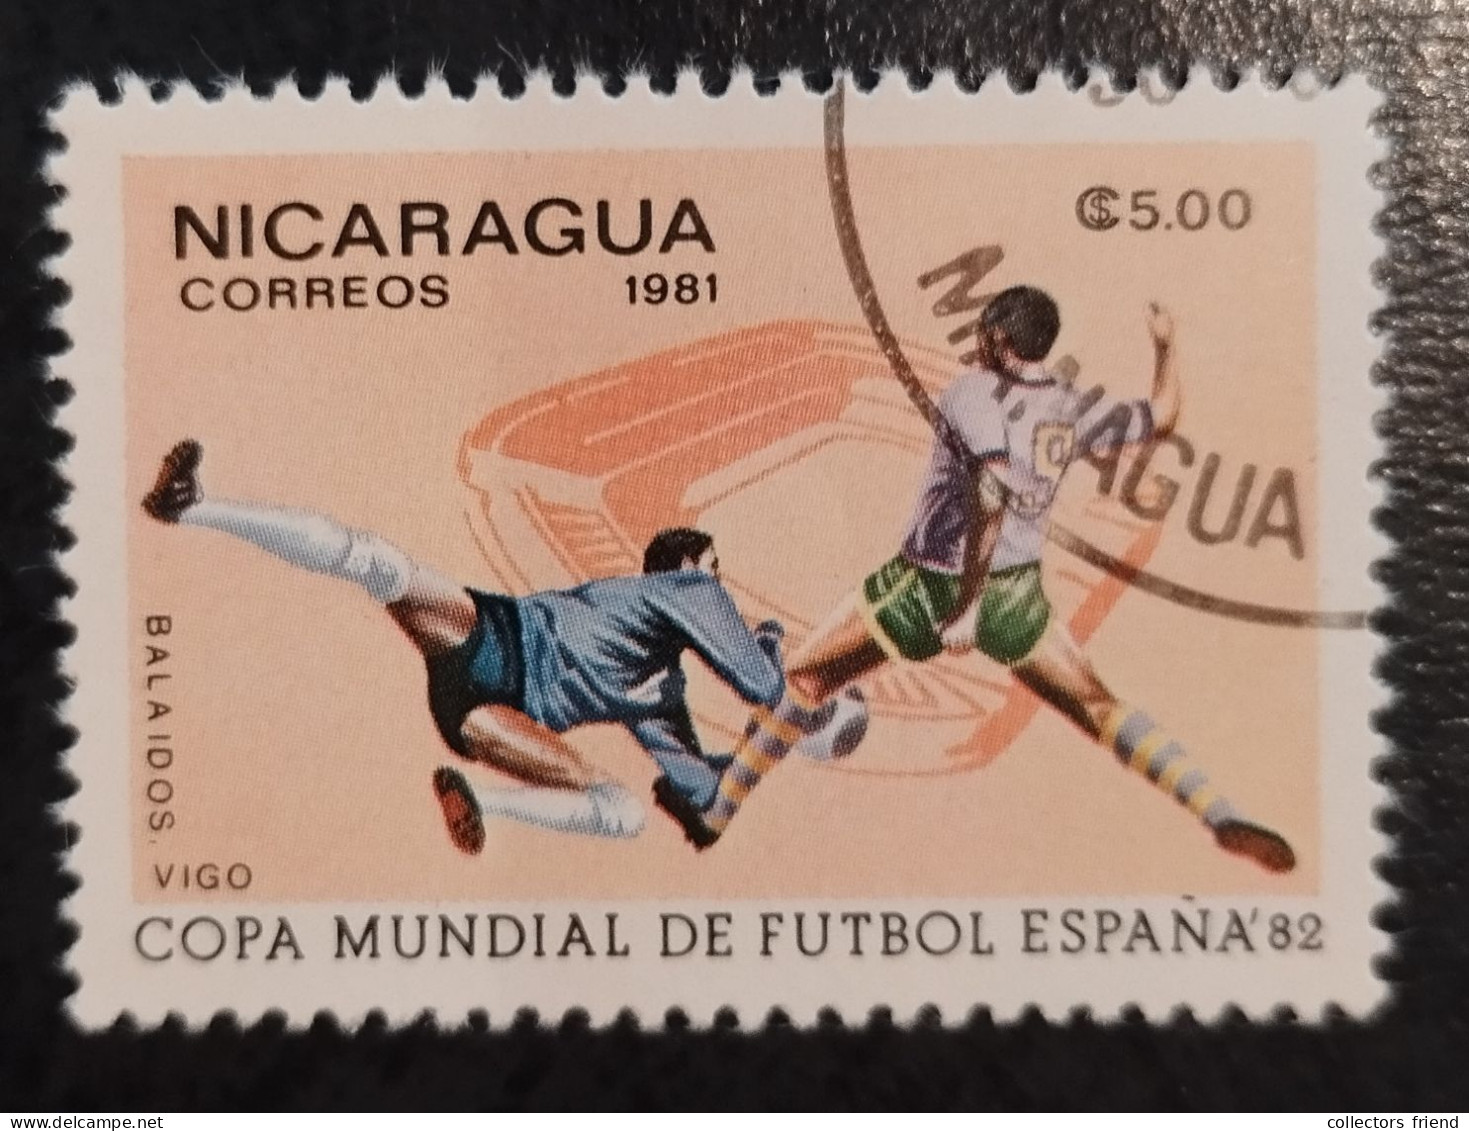 Nicaragua - 1981 - FOOTBALL FUSSBALL SOCCER - Used - 1982 – Espagne